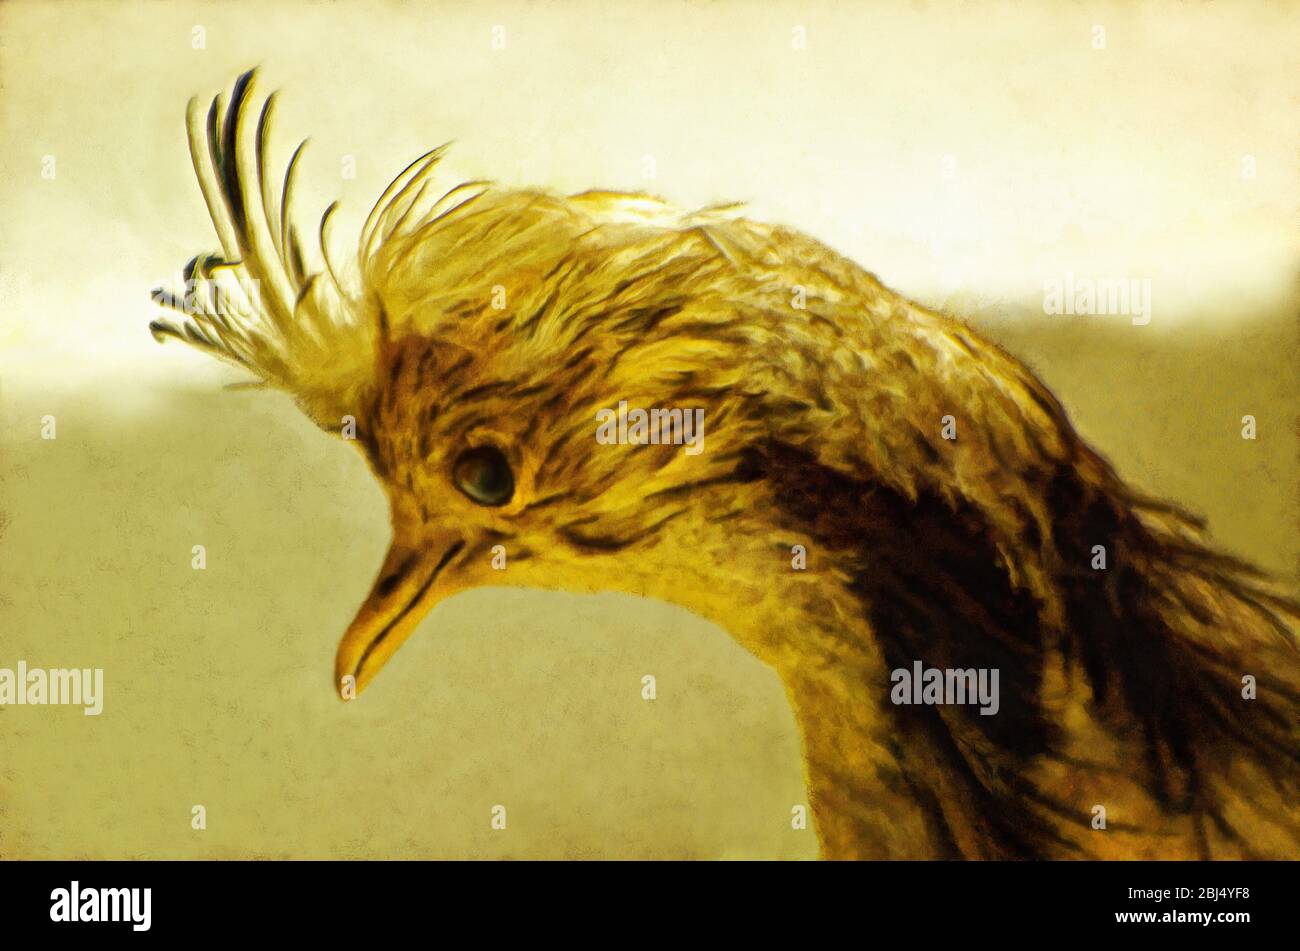 Wobble, Jack, or bustard (Latin Chlamydotis macqueenii) - Bird Cranes squad, Stock Photo